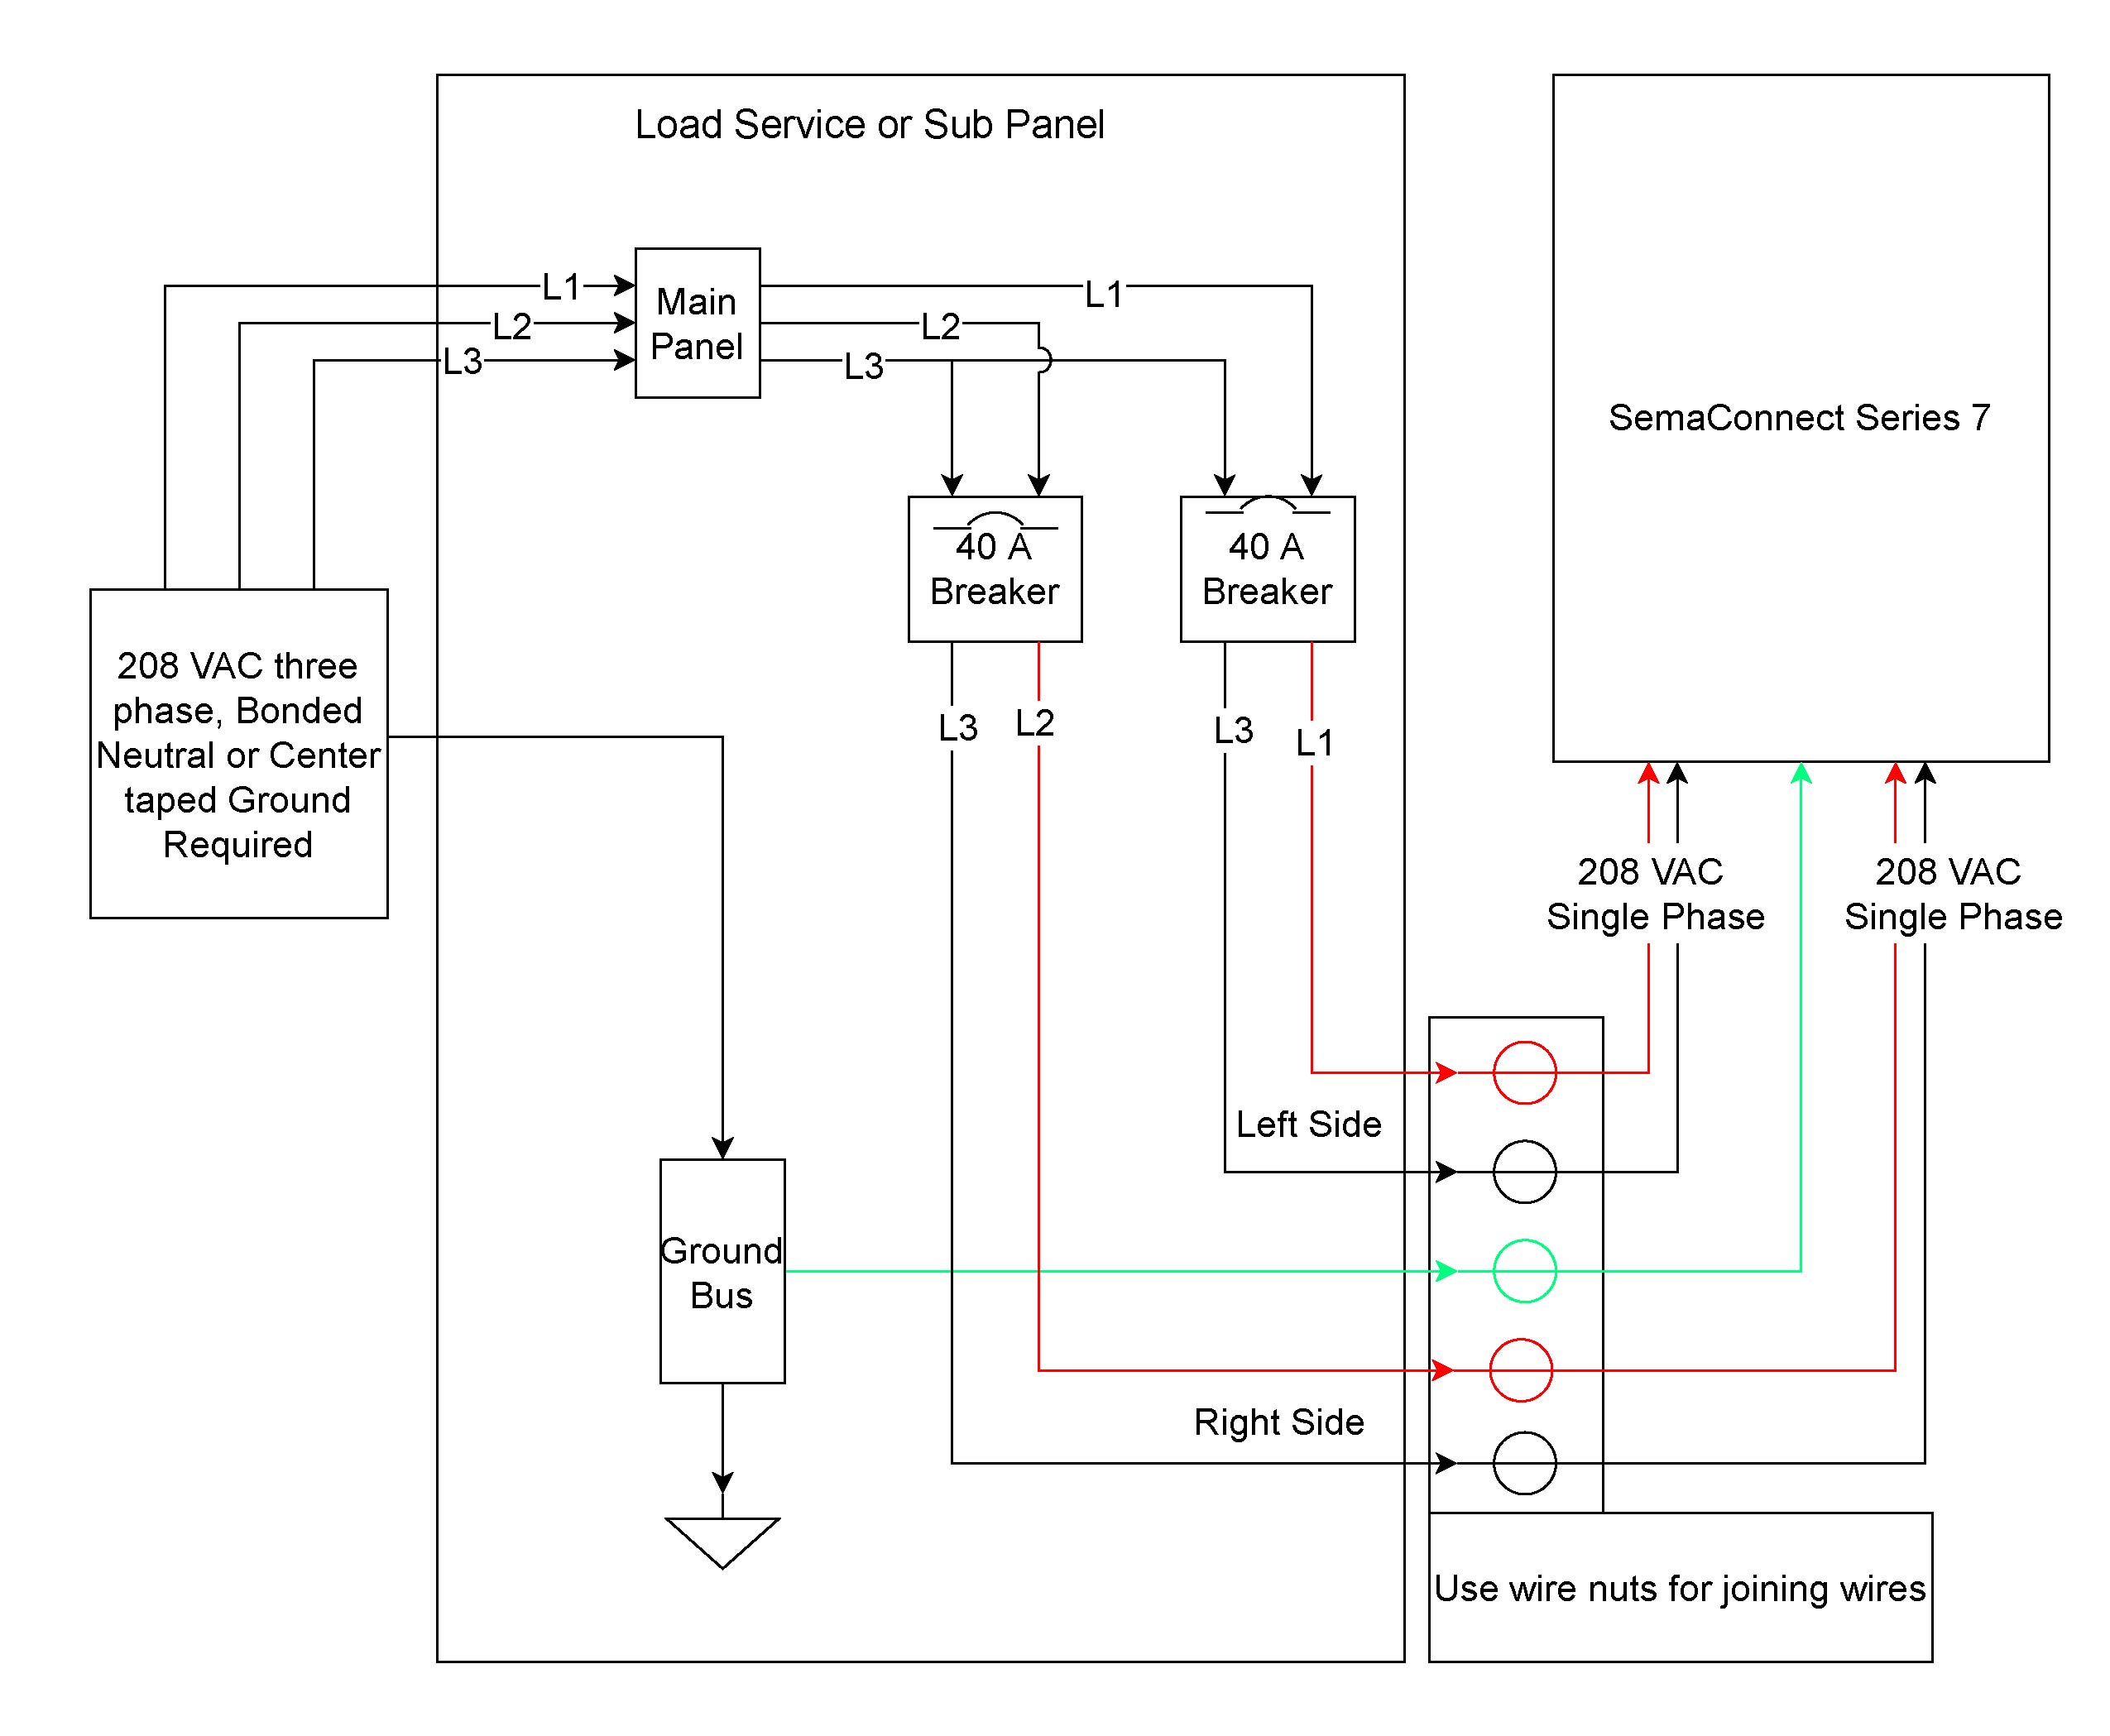 xsvi 6502 wiring diagram